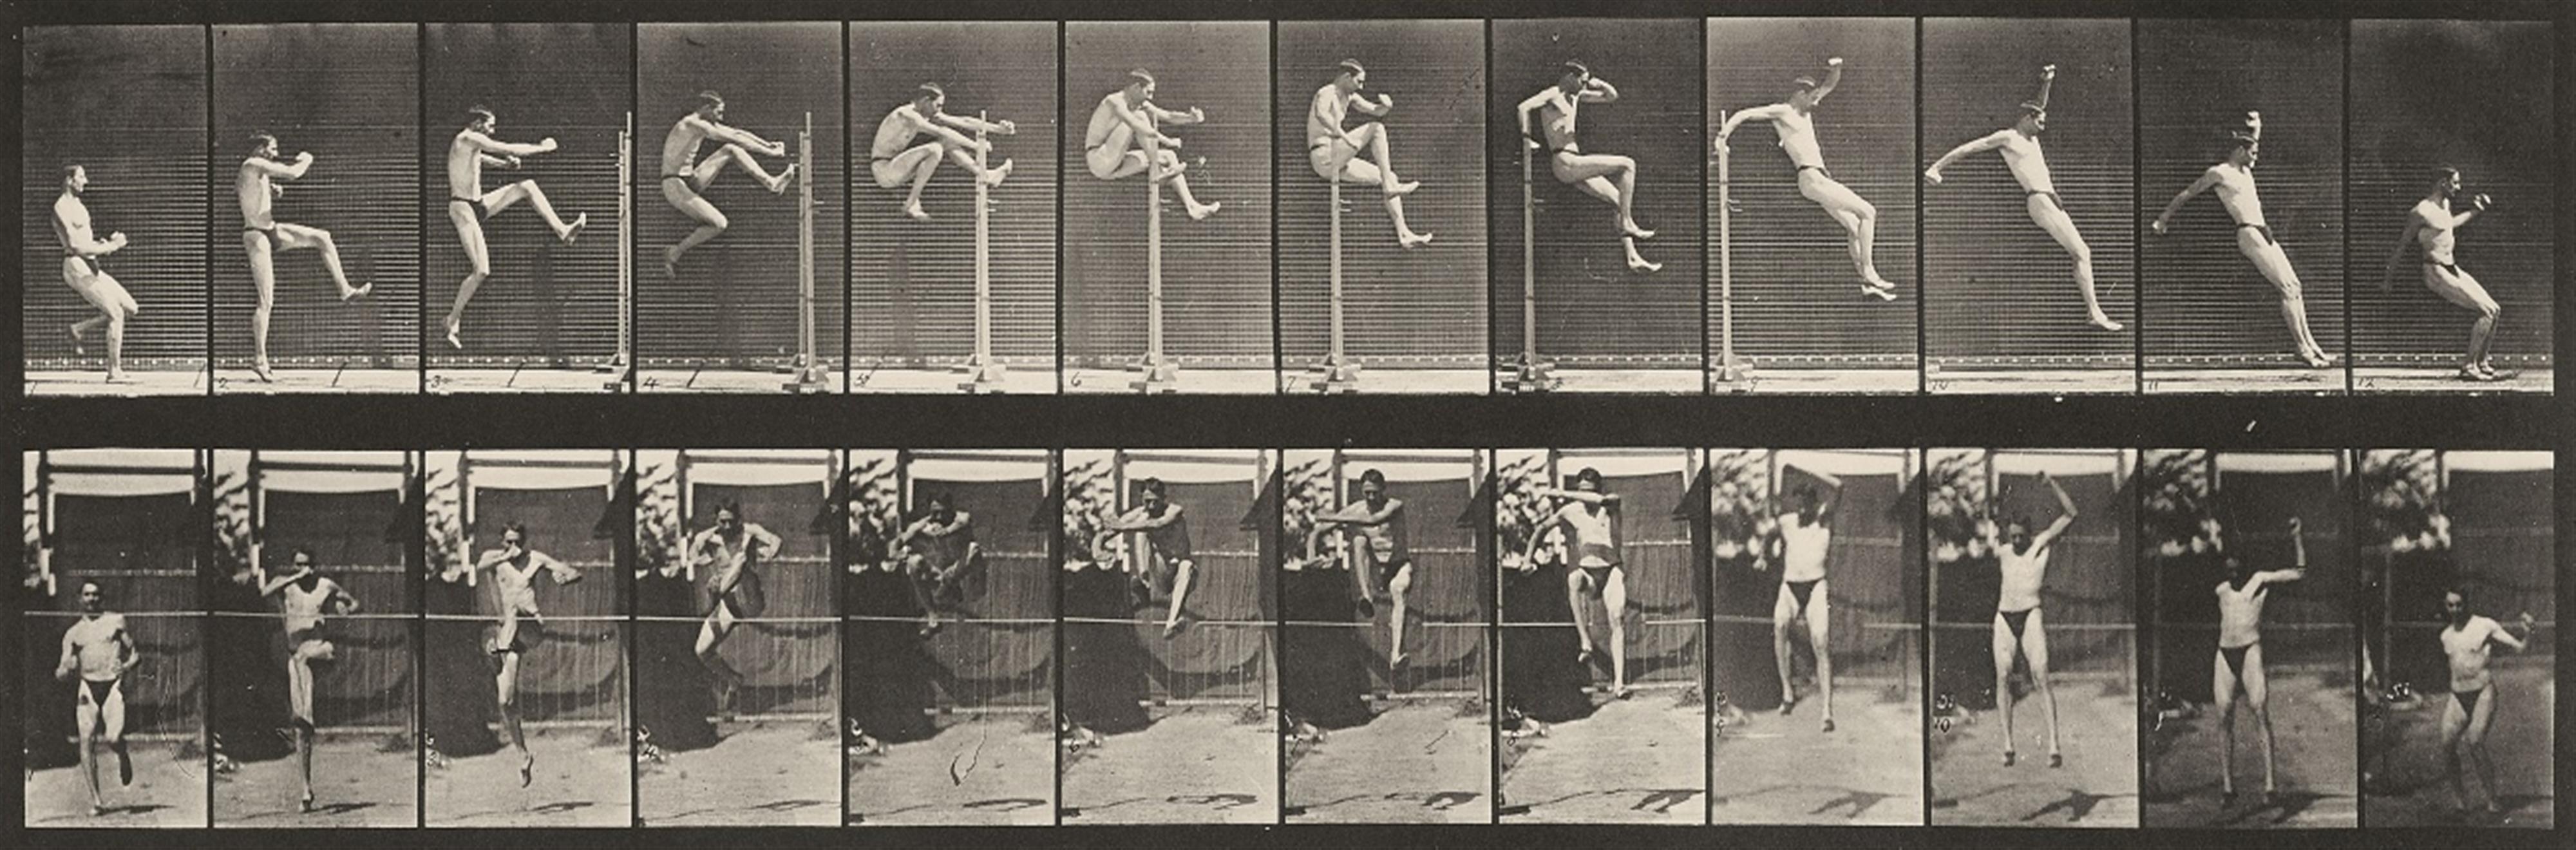 Eadweard Muybridge - Man performing running straight high jump (Tafel 152, aus: Animal Locomotion) - image-1